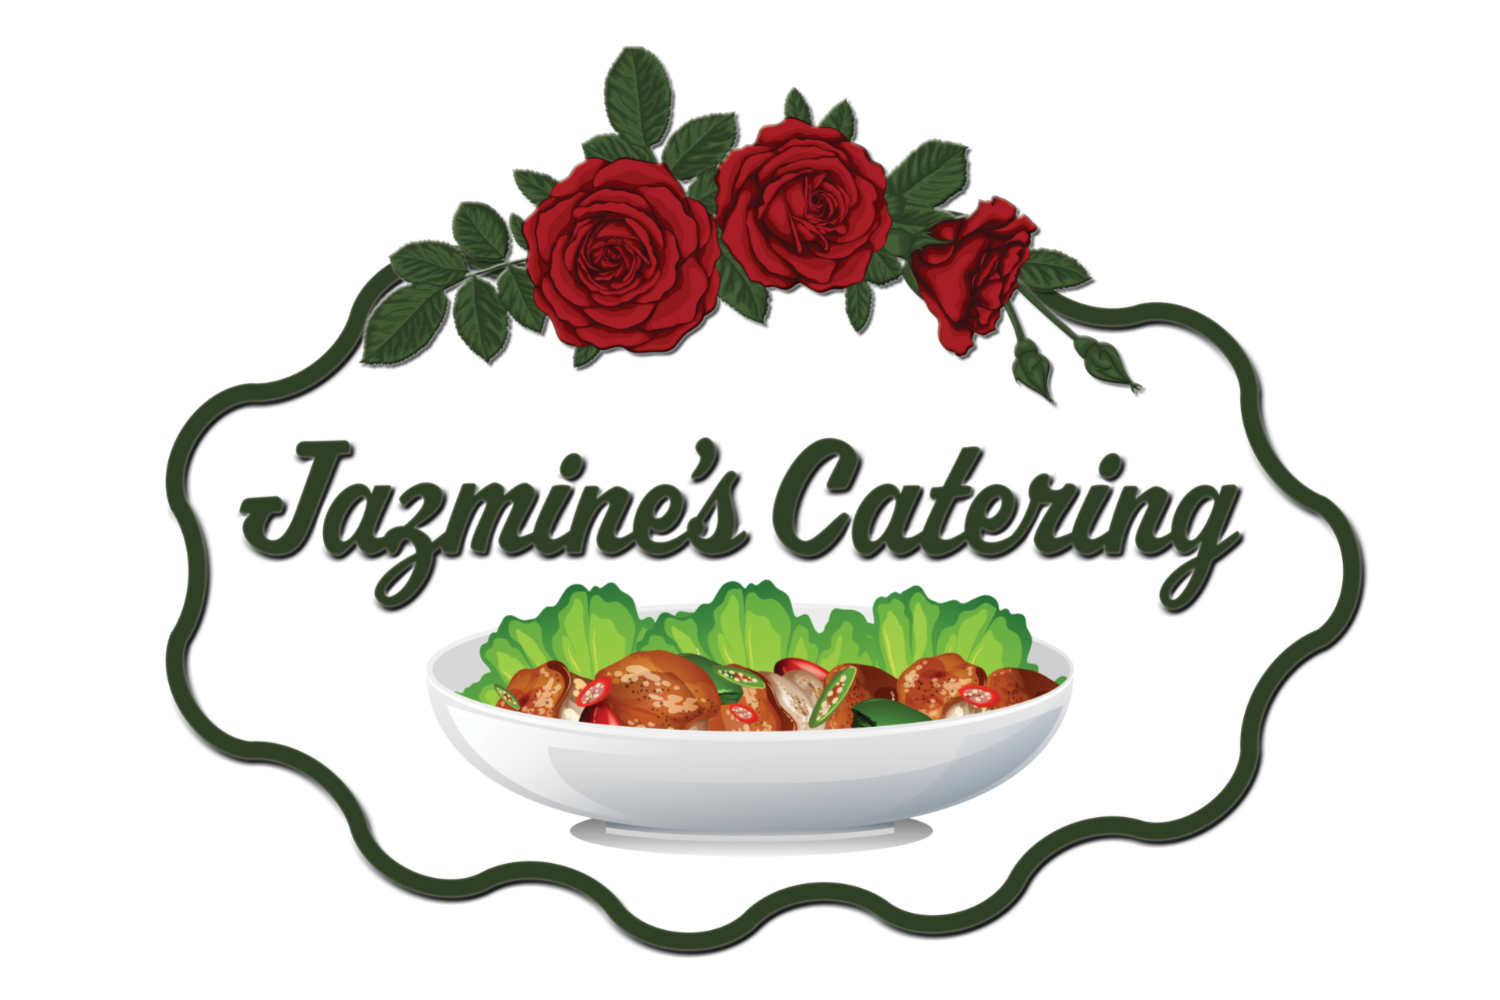 Jasmine's Catering logo 1